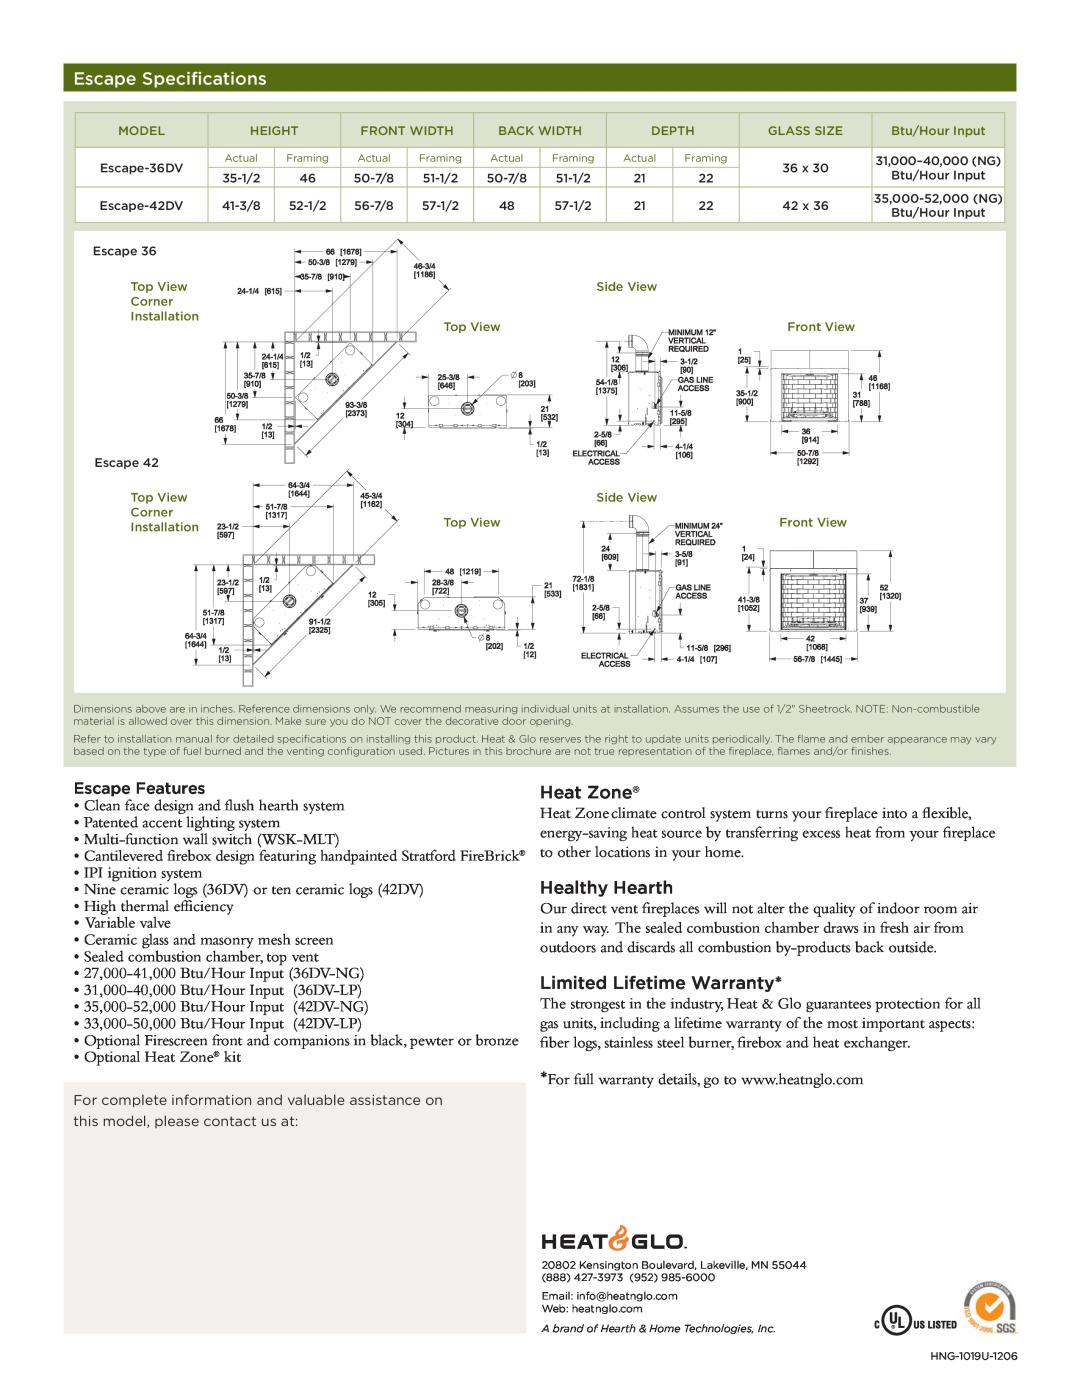 Hearth and Home Technologies ESCAPE-36DV manual Escape Specifications, Heat Zone, Healthy Hearth, Limited Lifetime Warranty 